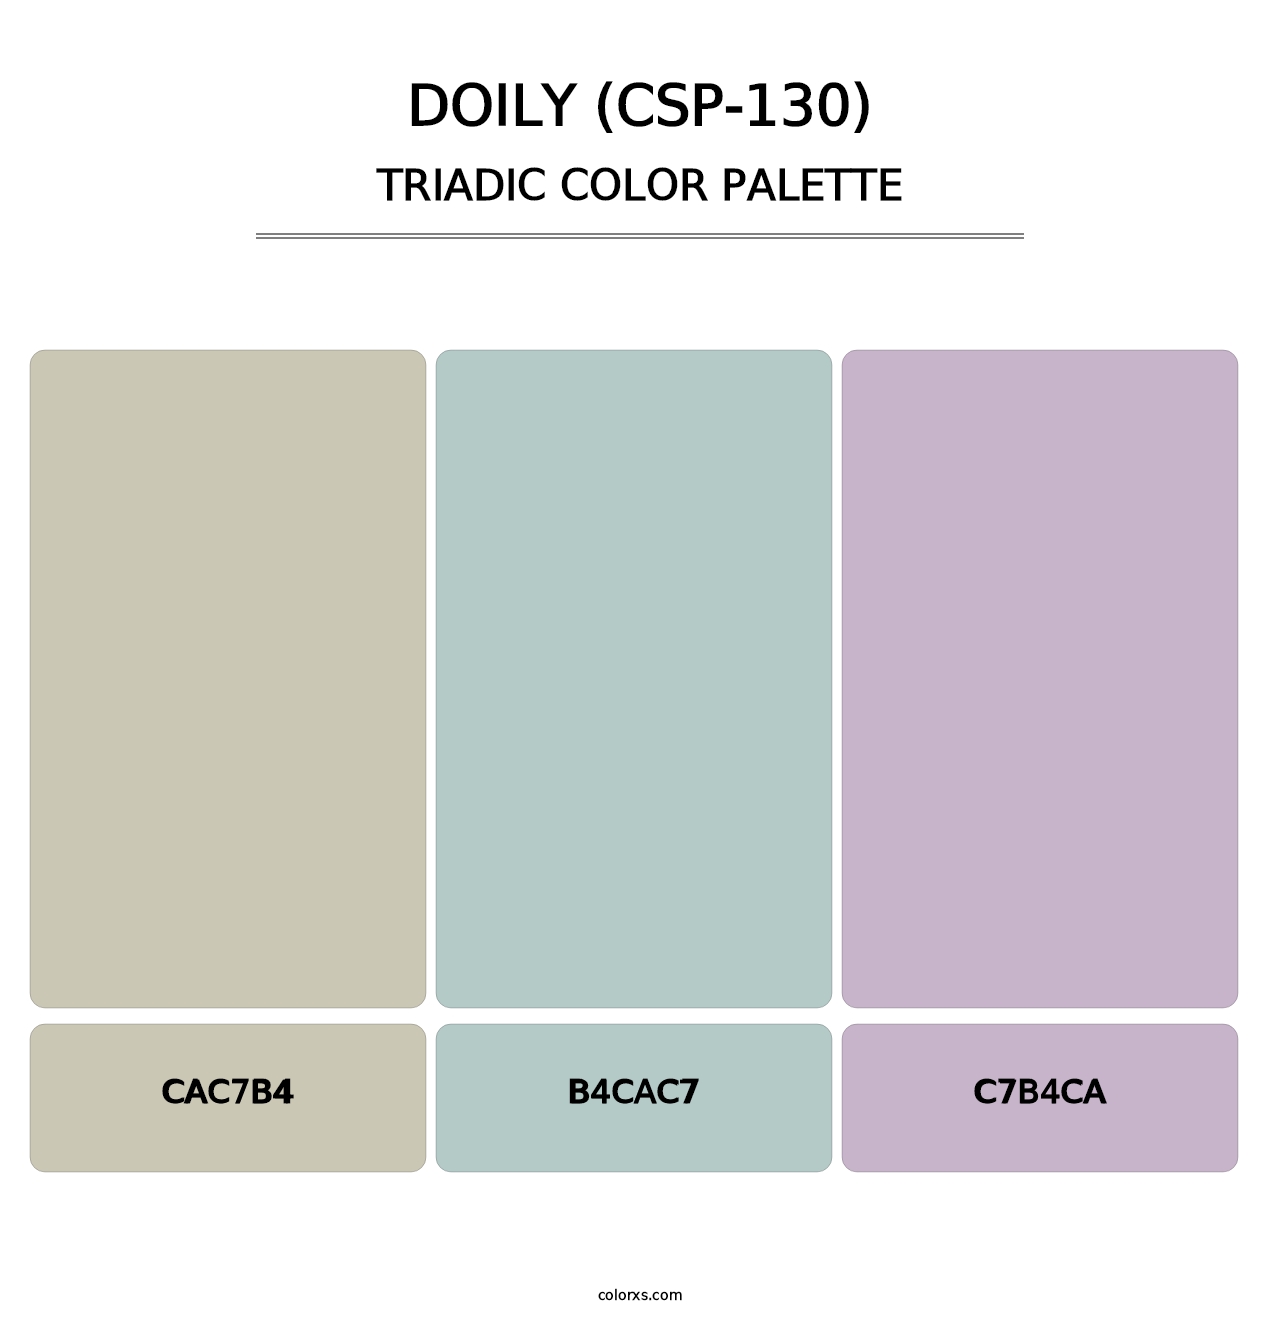 Doily (CSP-130) - Triadic Color Palette